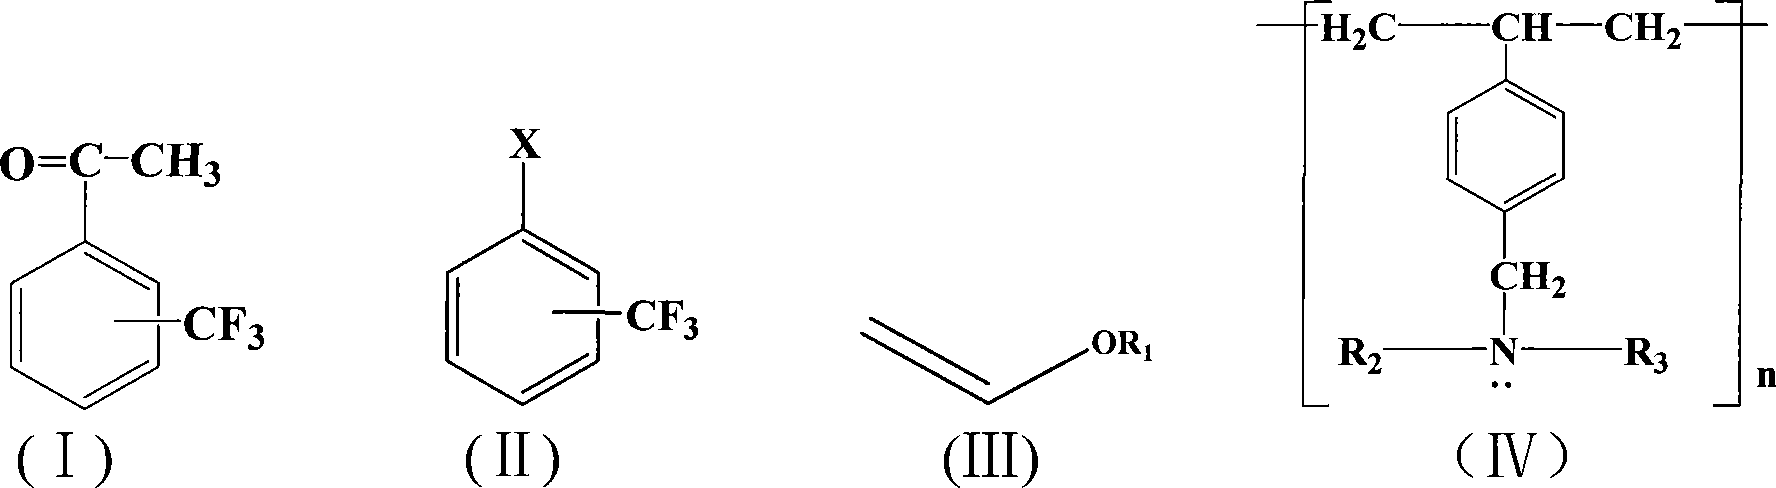 A method for preparing trifluoromethyl acetophenone compound